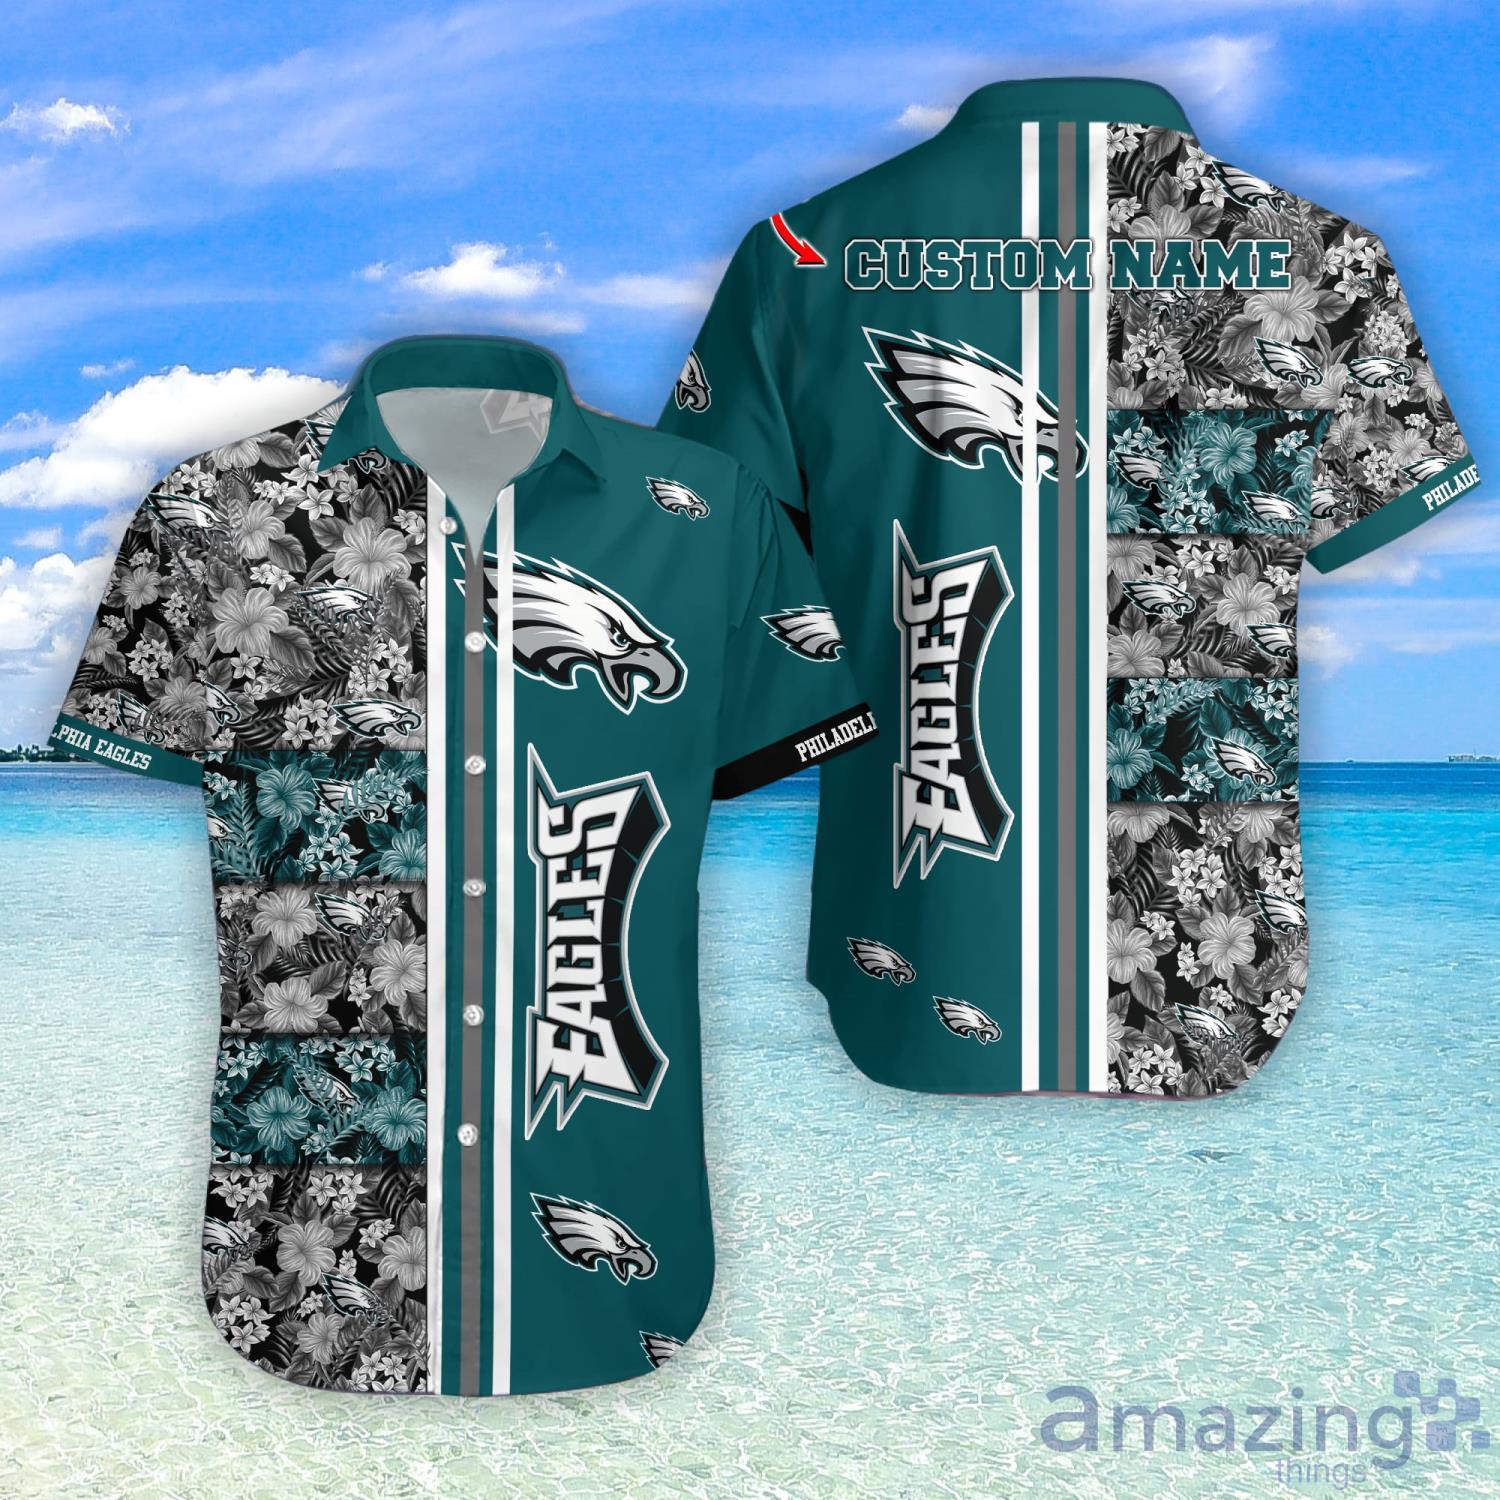 NFL Philadelphia Eagles Grateful Dead Hawaiian Shirt - Tagotee